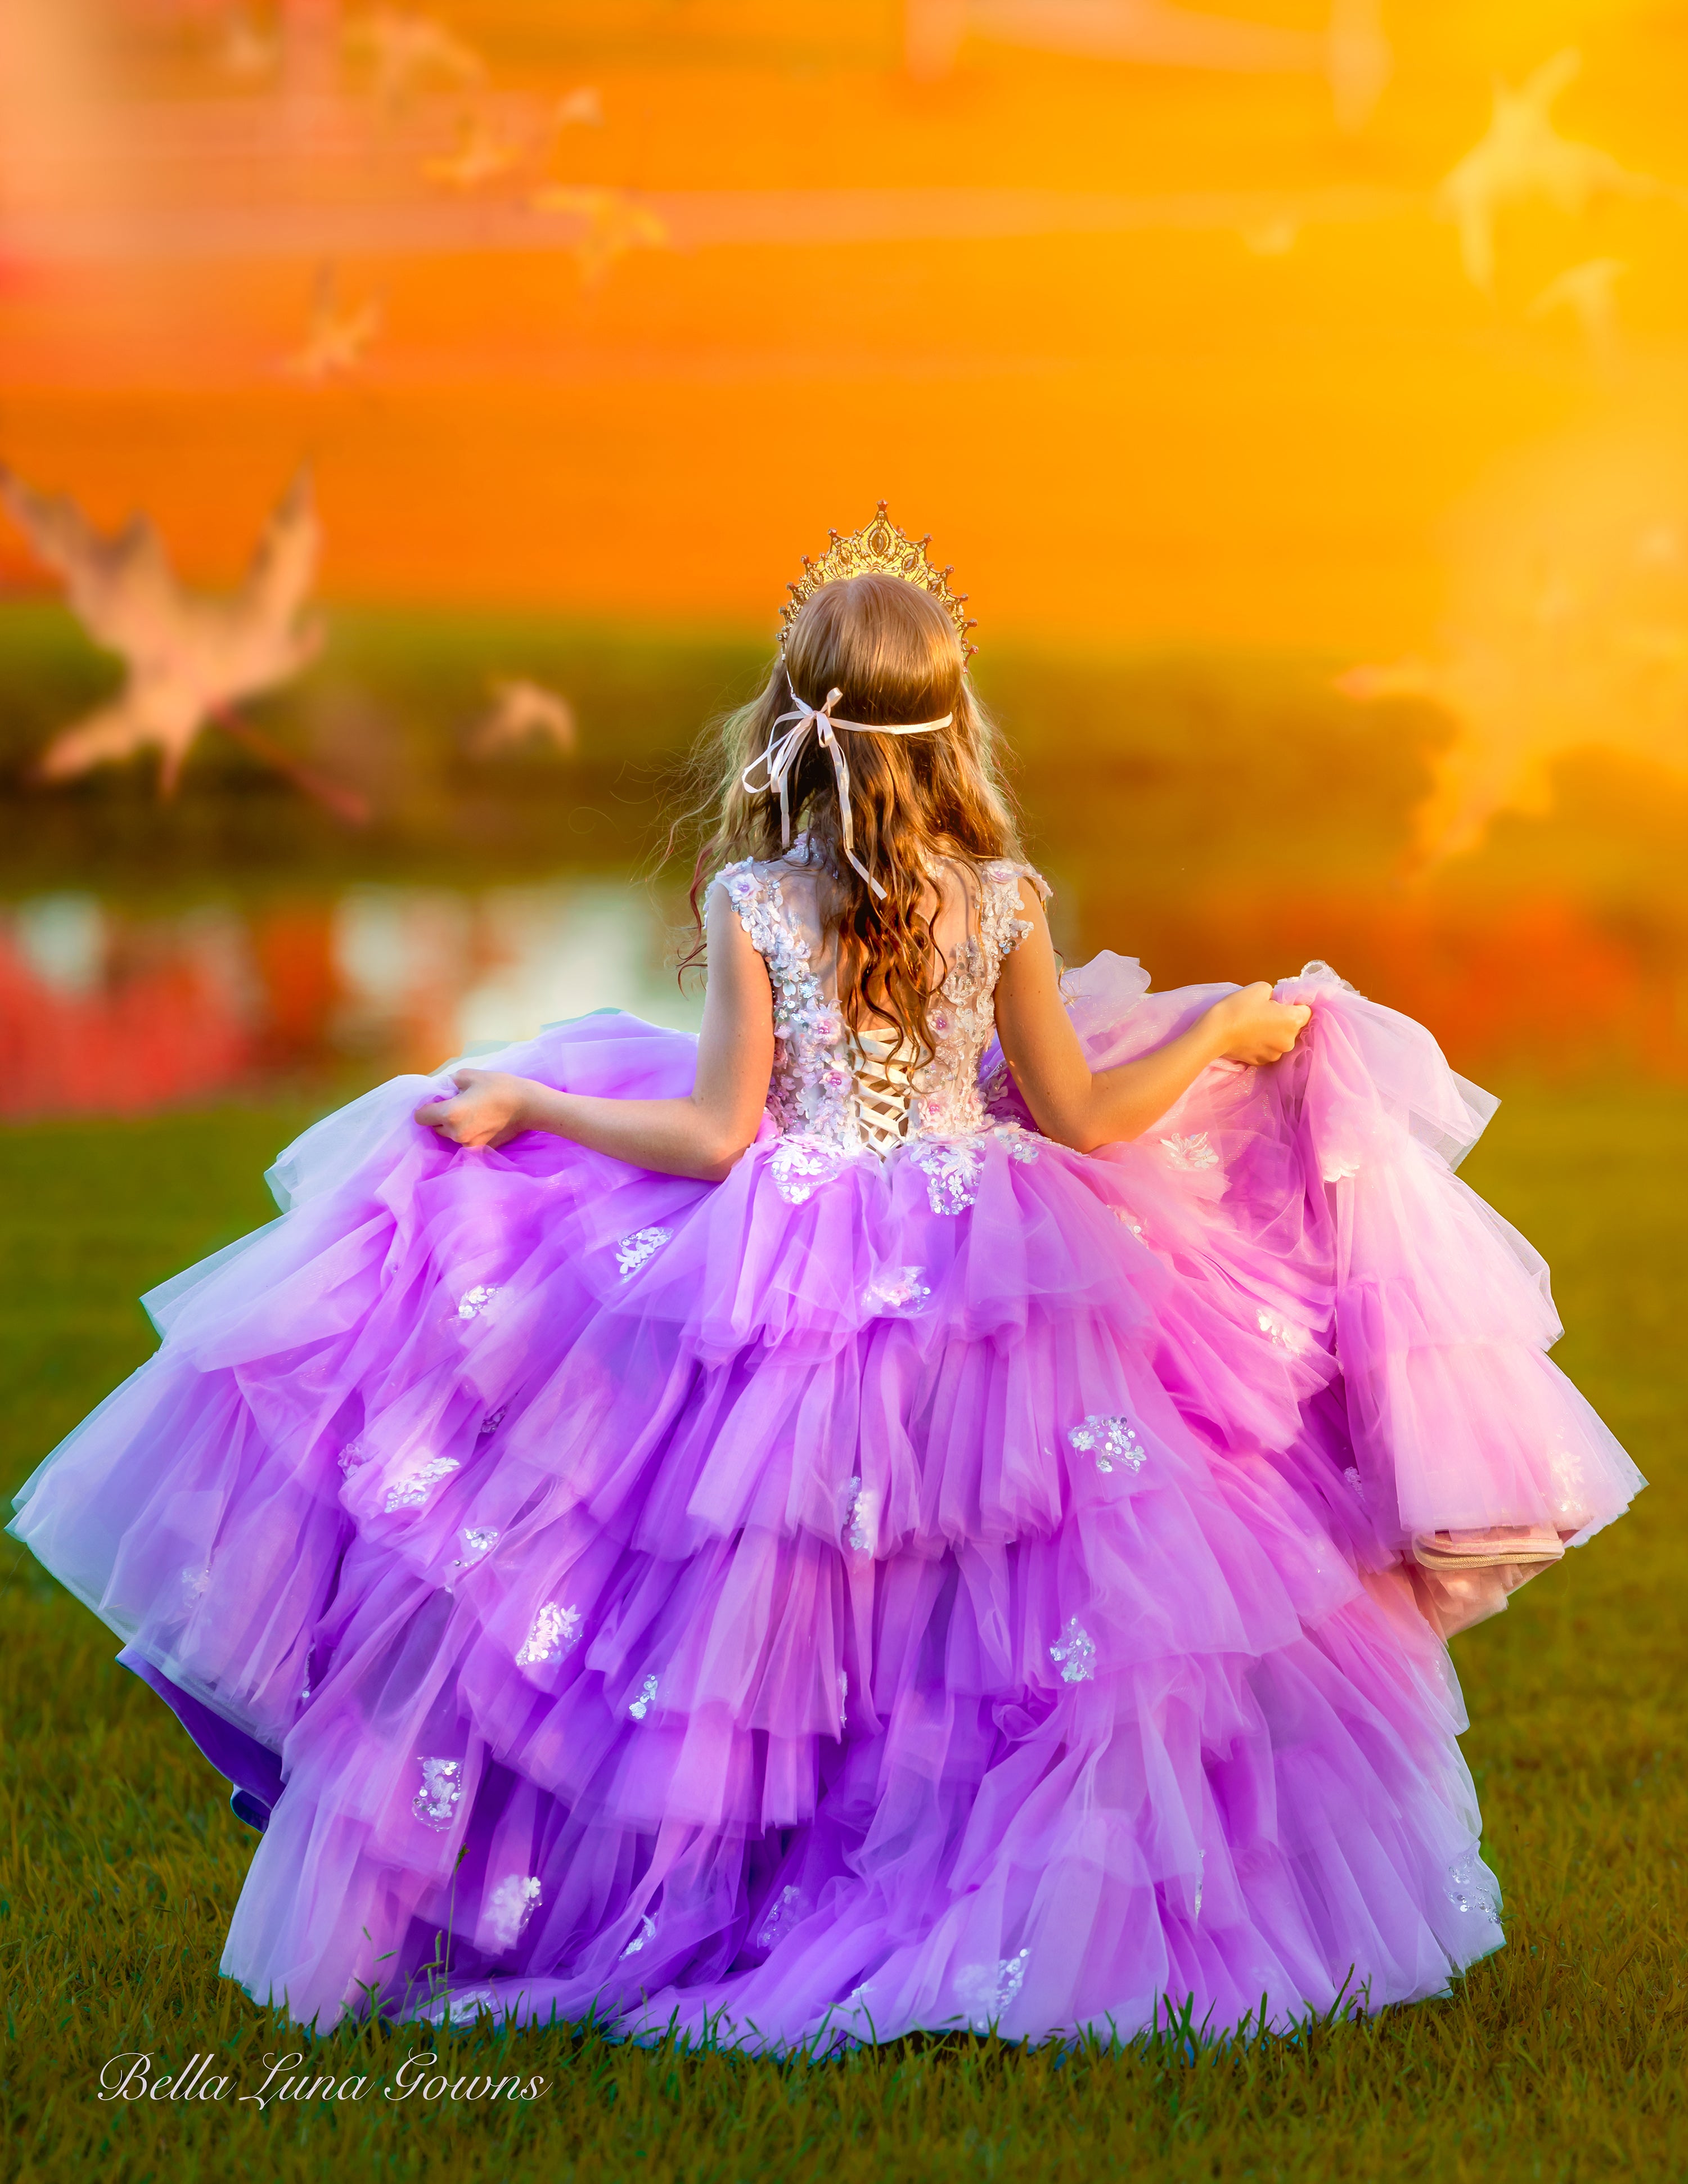 Lilac - Bella Luna Gowns